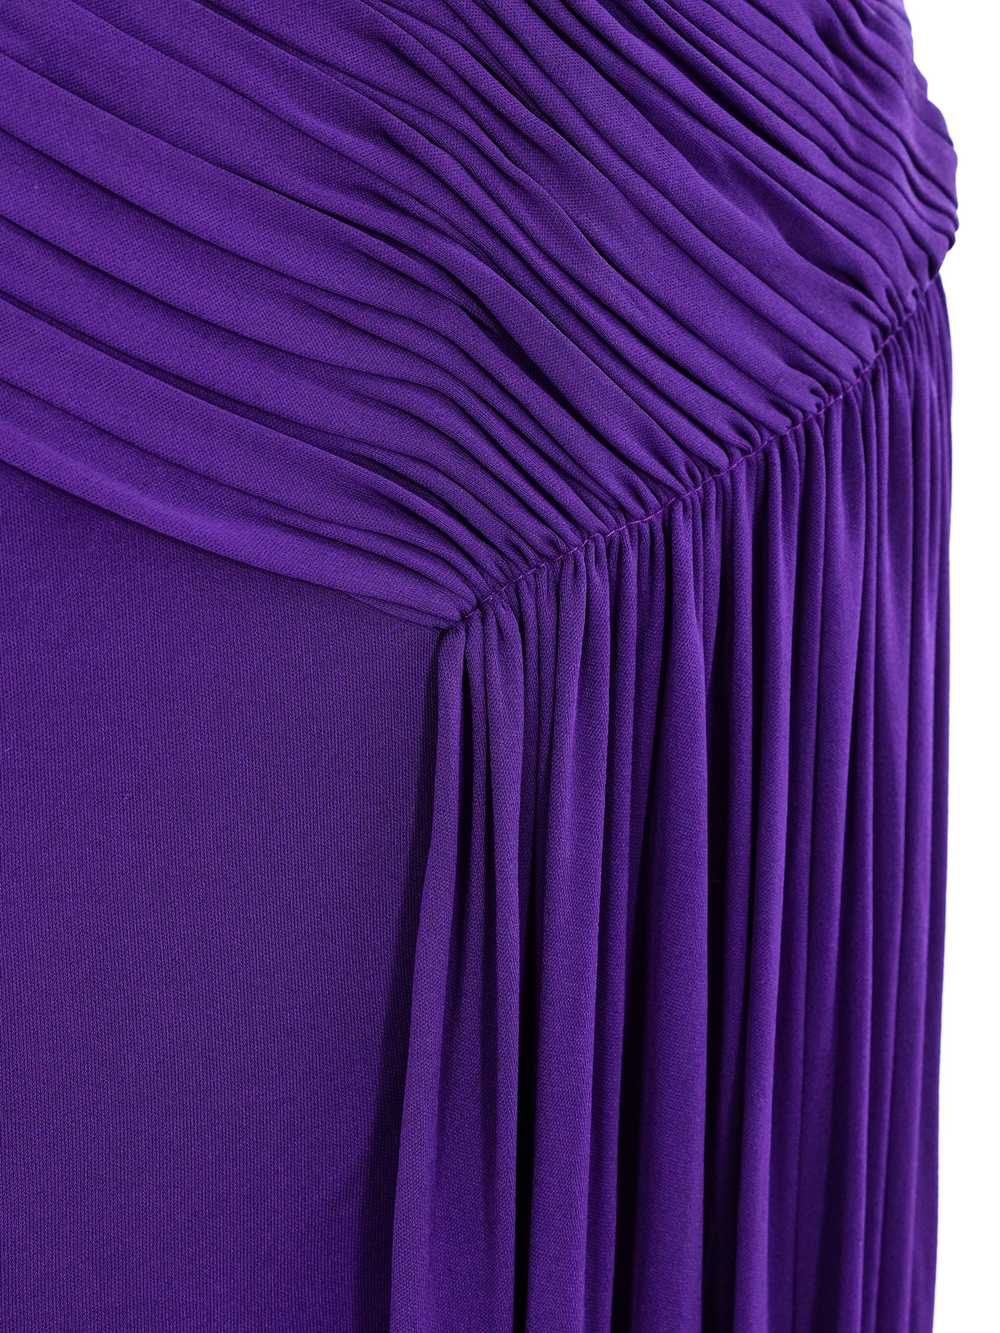 Vicky Tiel Ruched Purple Mini Dress - image 4